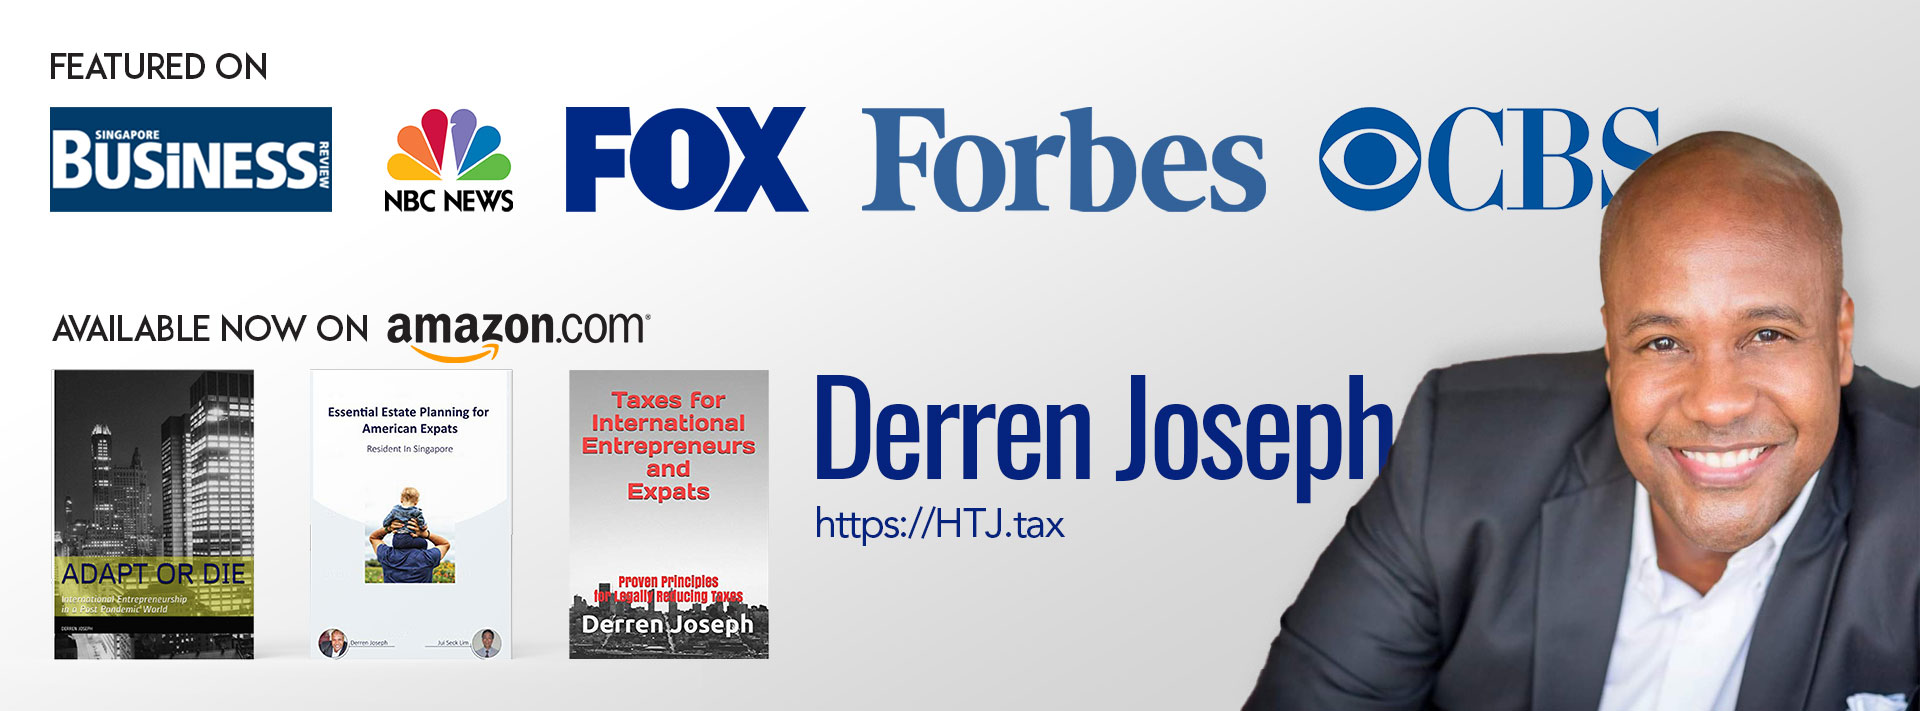 Derren Joseph US Tax Expert Promo image